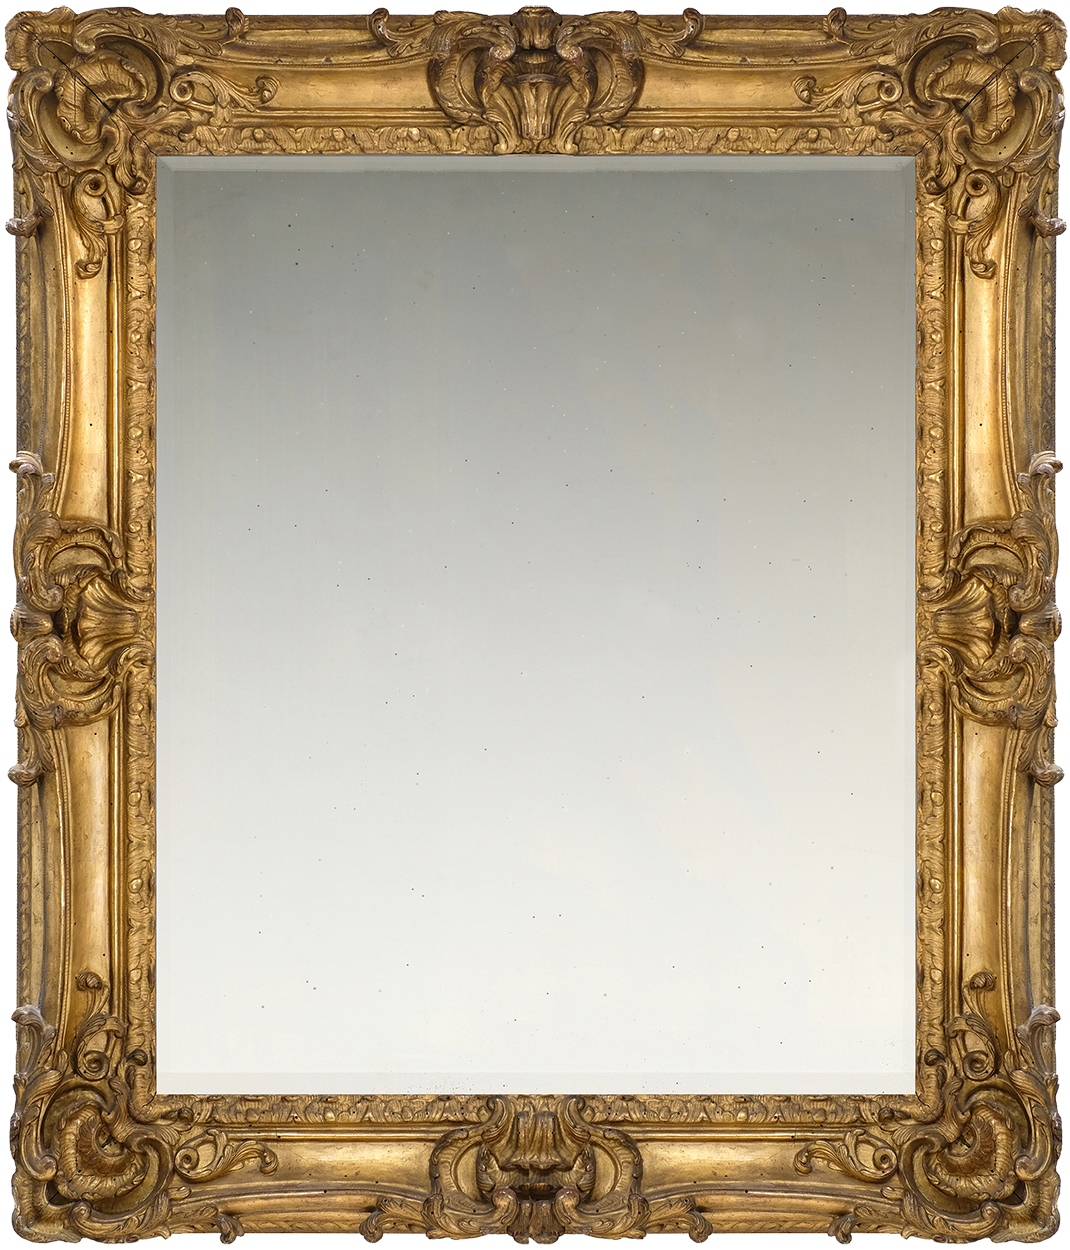  18th century French Provençal Louis XV Rococo frame